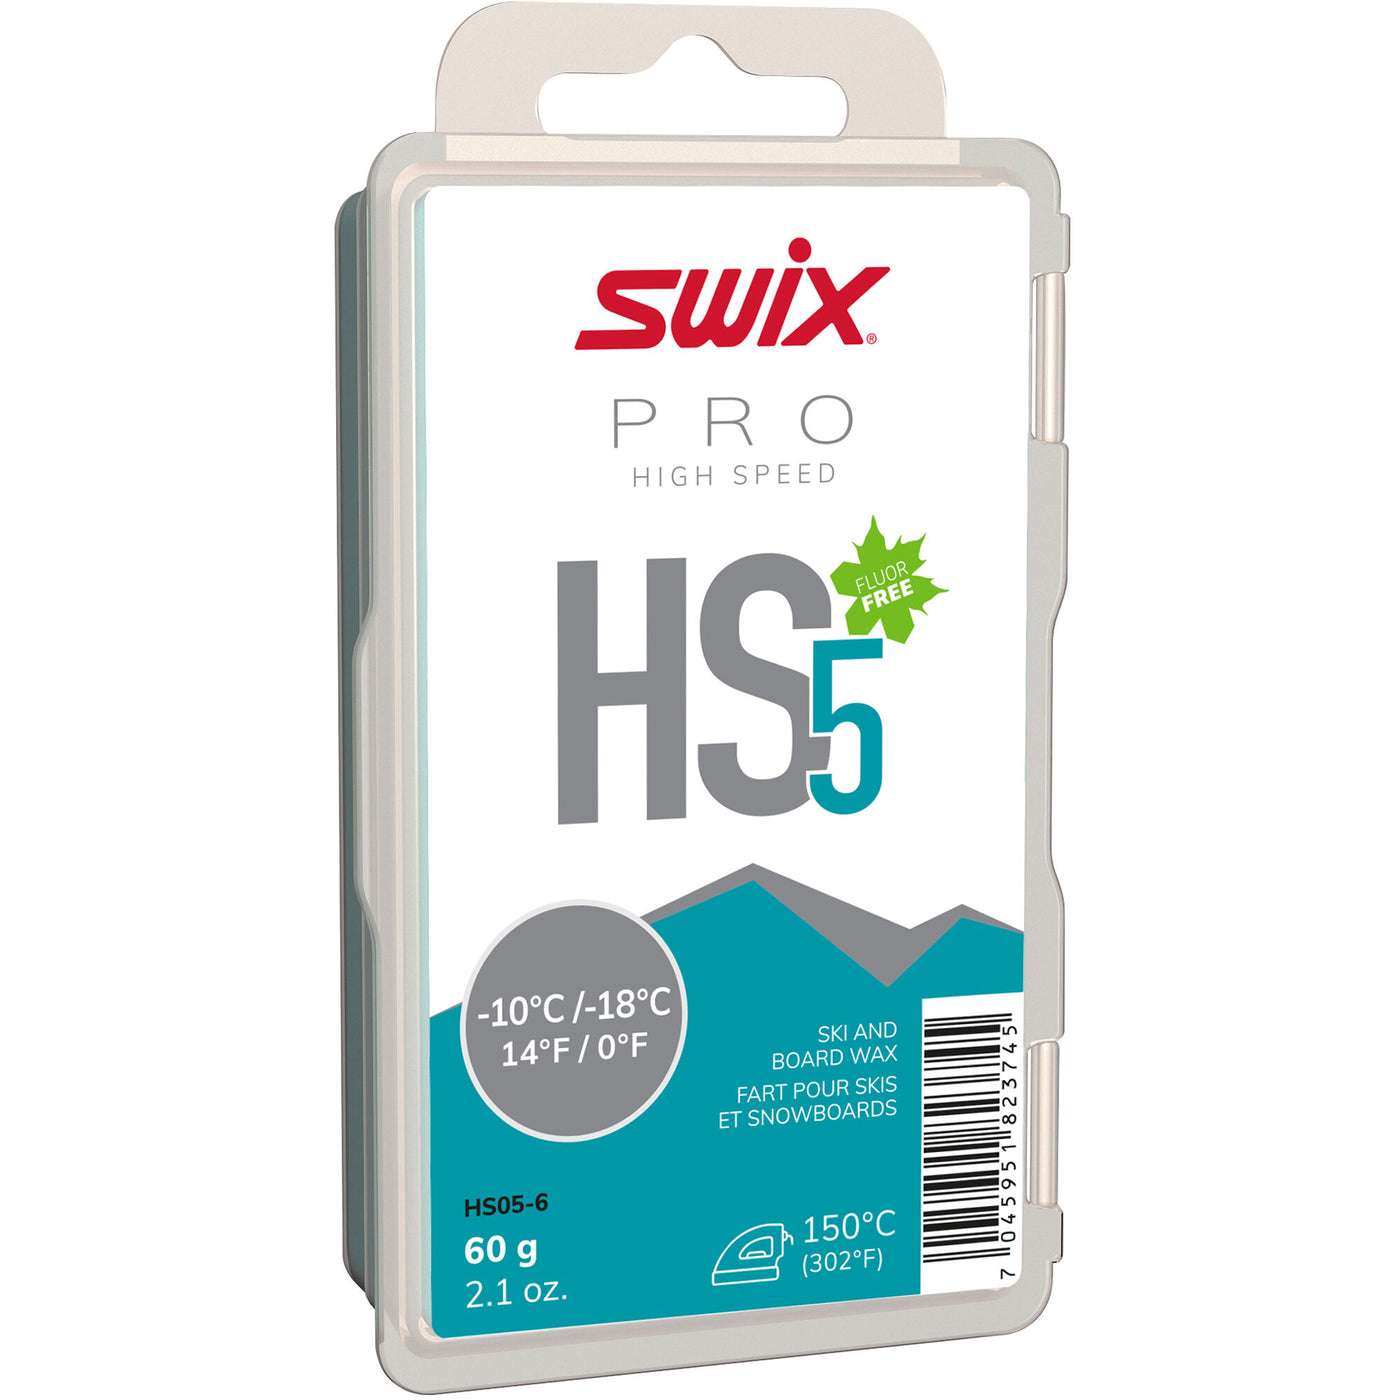 Swix HS5 Turquoise 60g - High Speed SKI & SNOWBOARD WAX Swix   